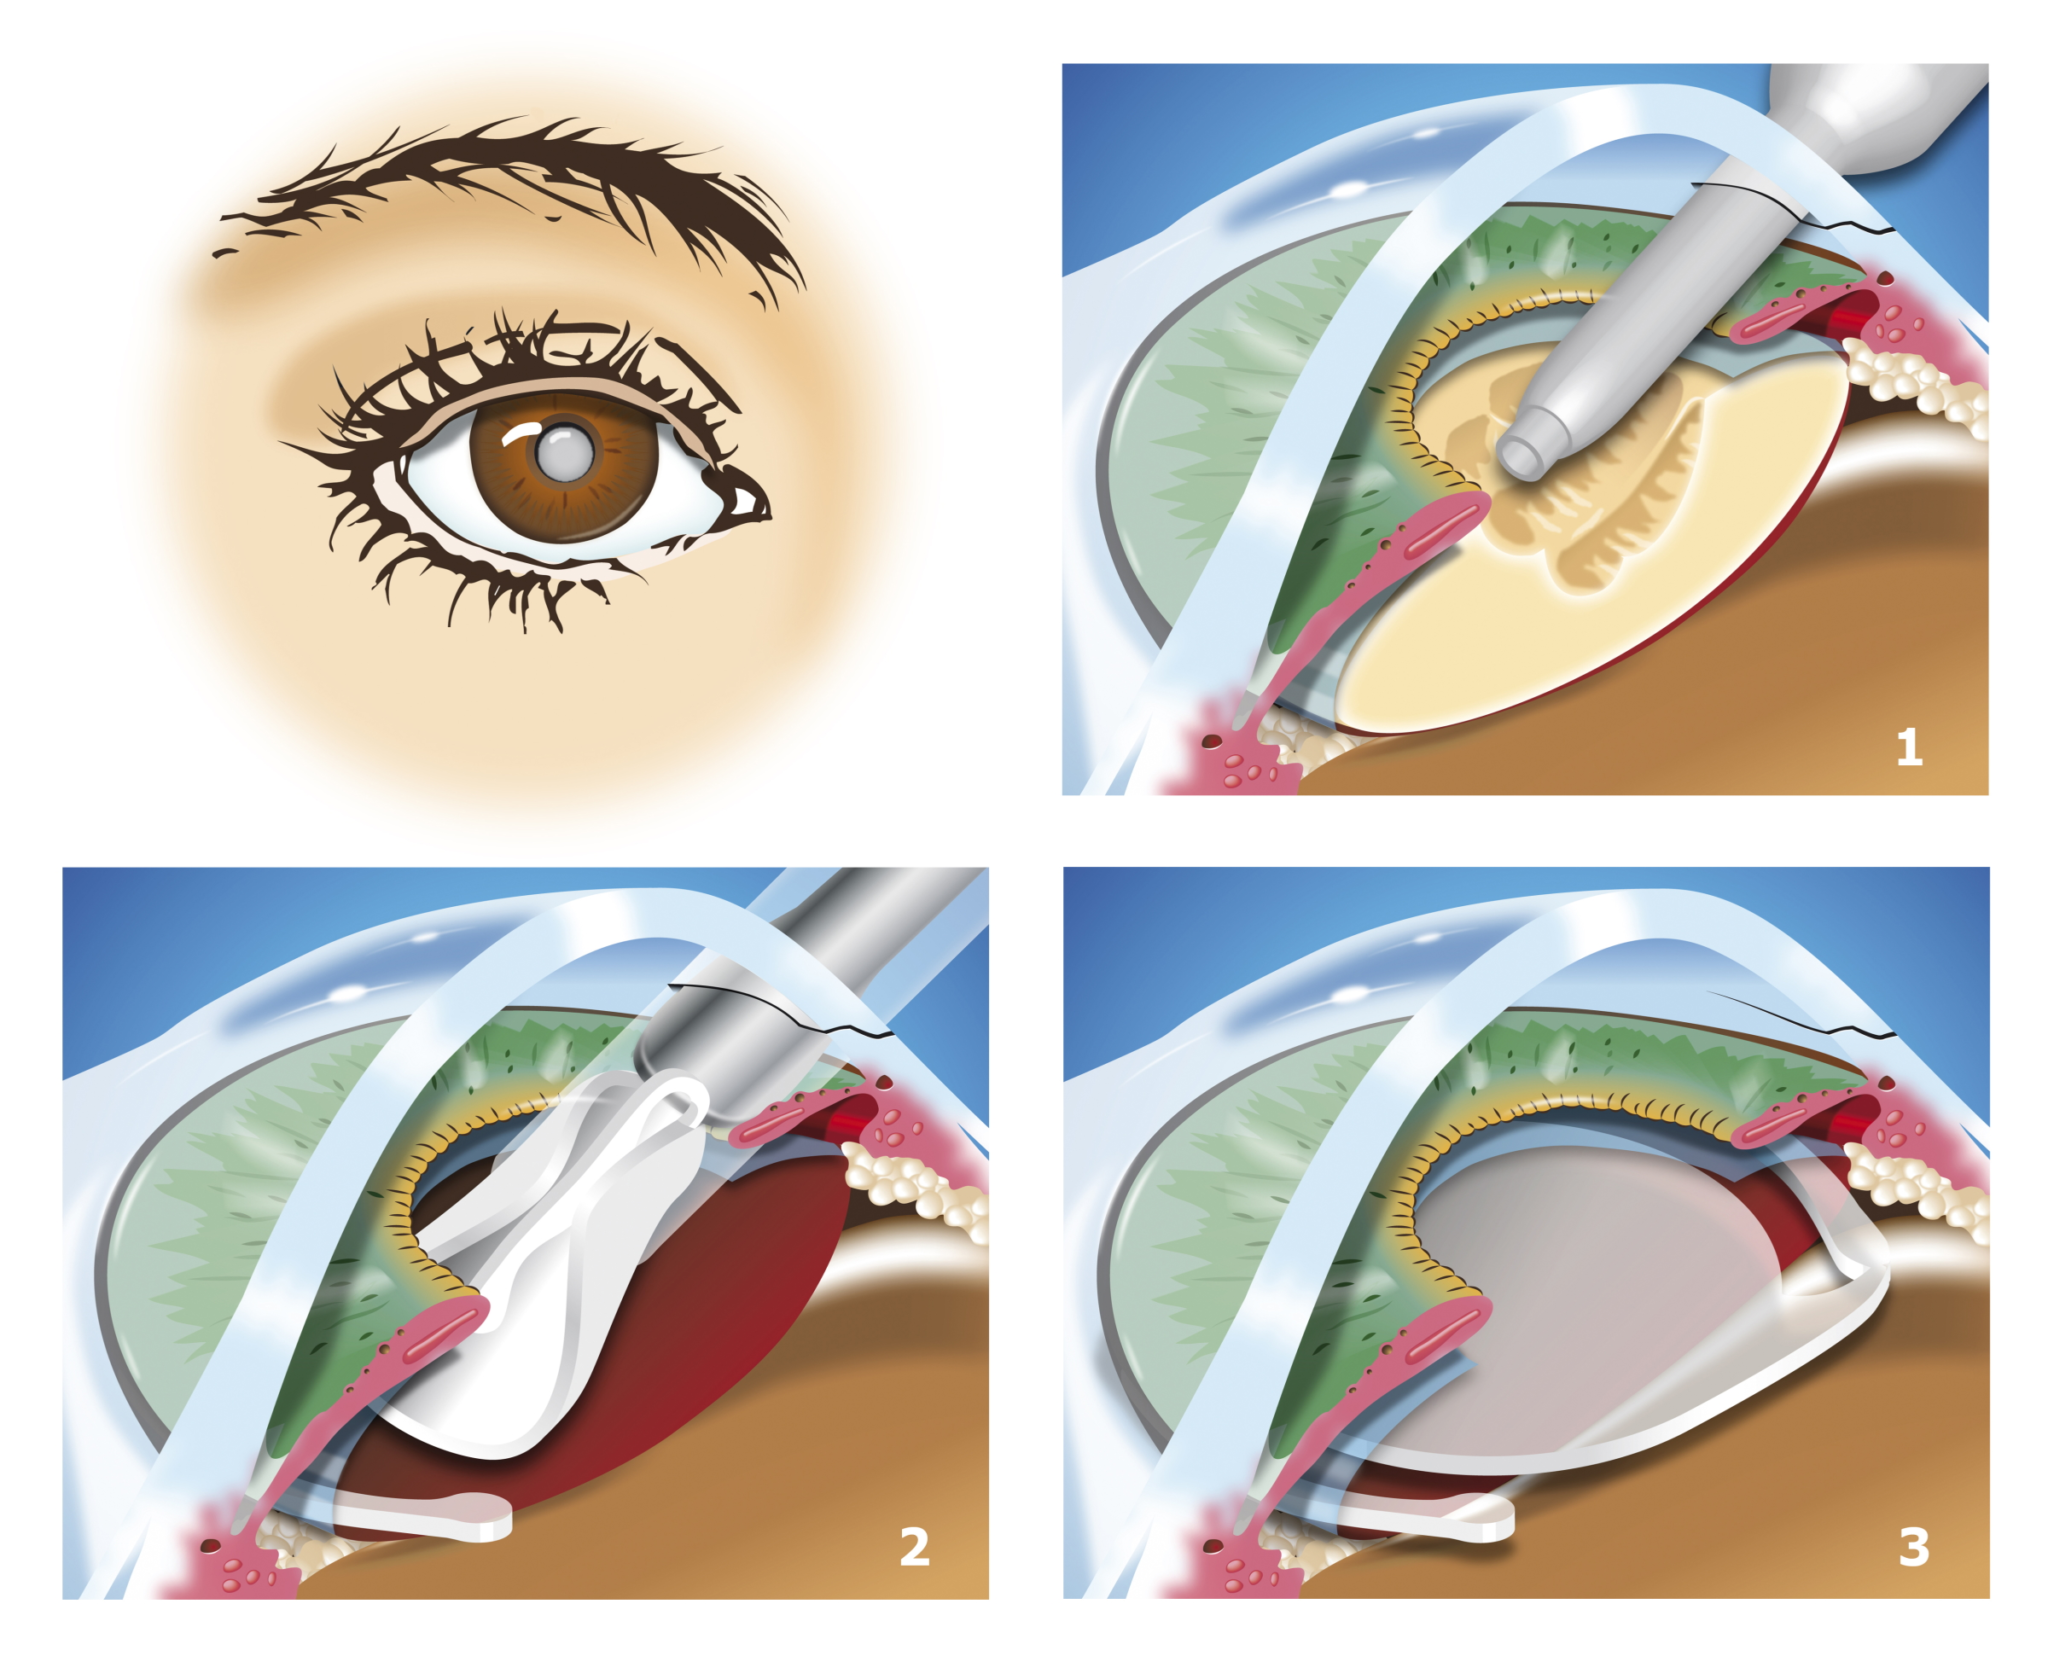 Операция факоэмульсификация катаракты. Катаракта факоэмульсификация. Этапы операции факоэмульсификации катаракты. Ультразвуковая факоэмульсификация катаракты этапы. Факоэмульсификация катаракты с имплантацией интраокулярной линзы.